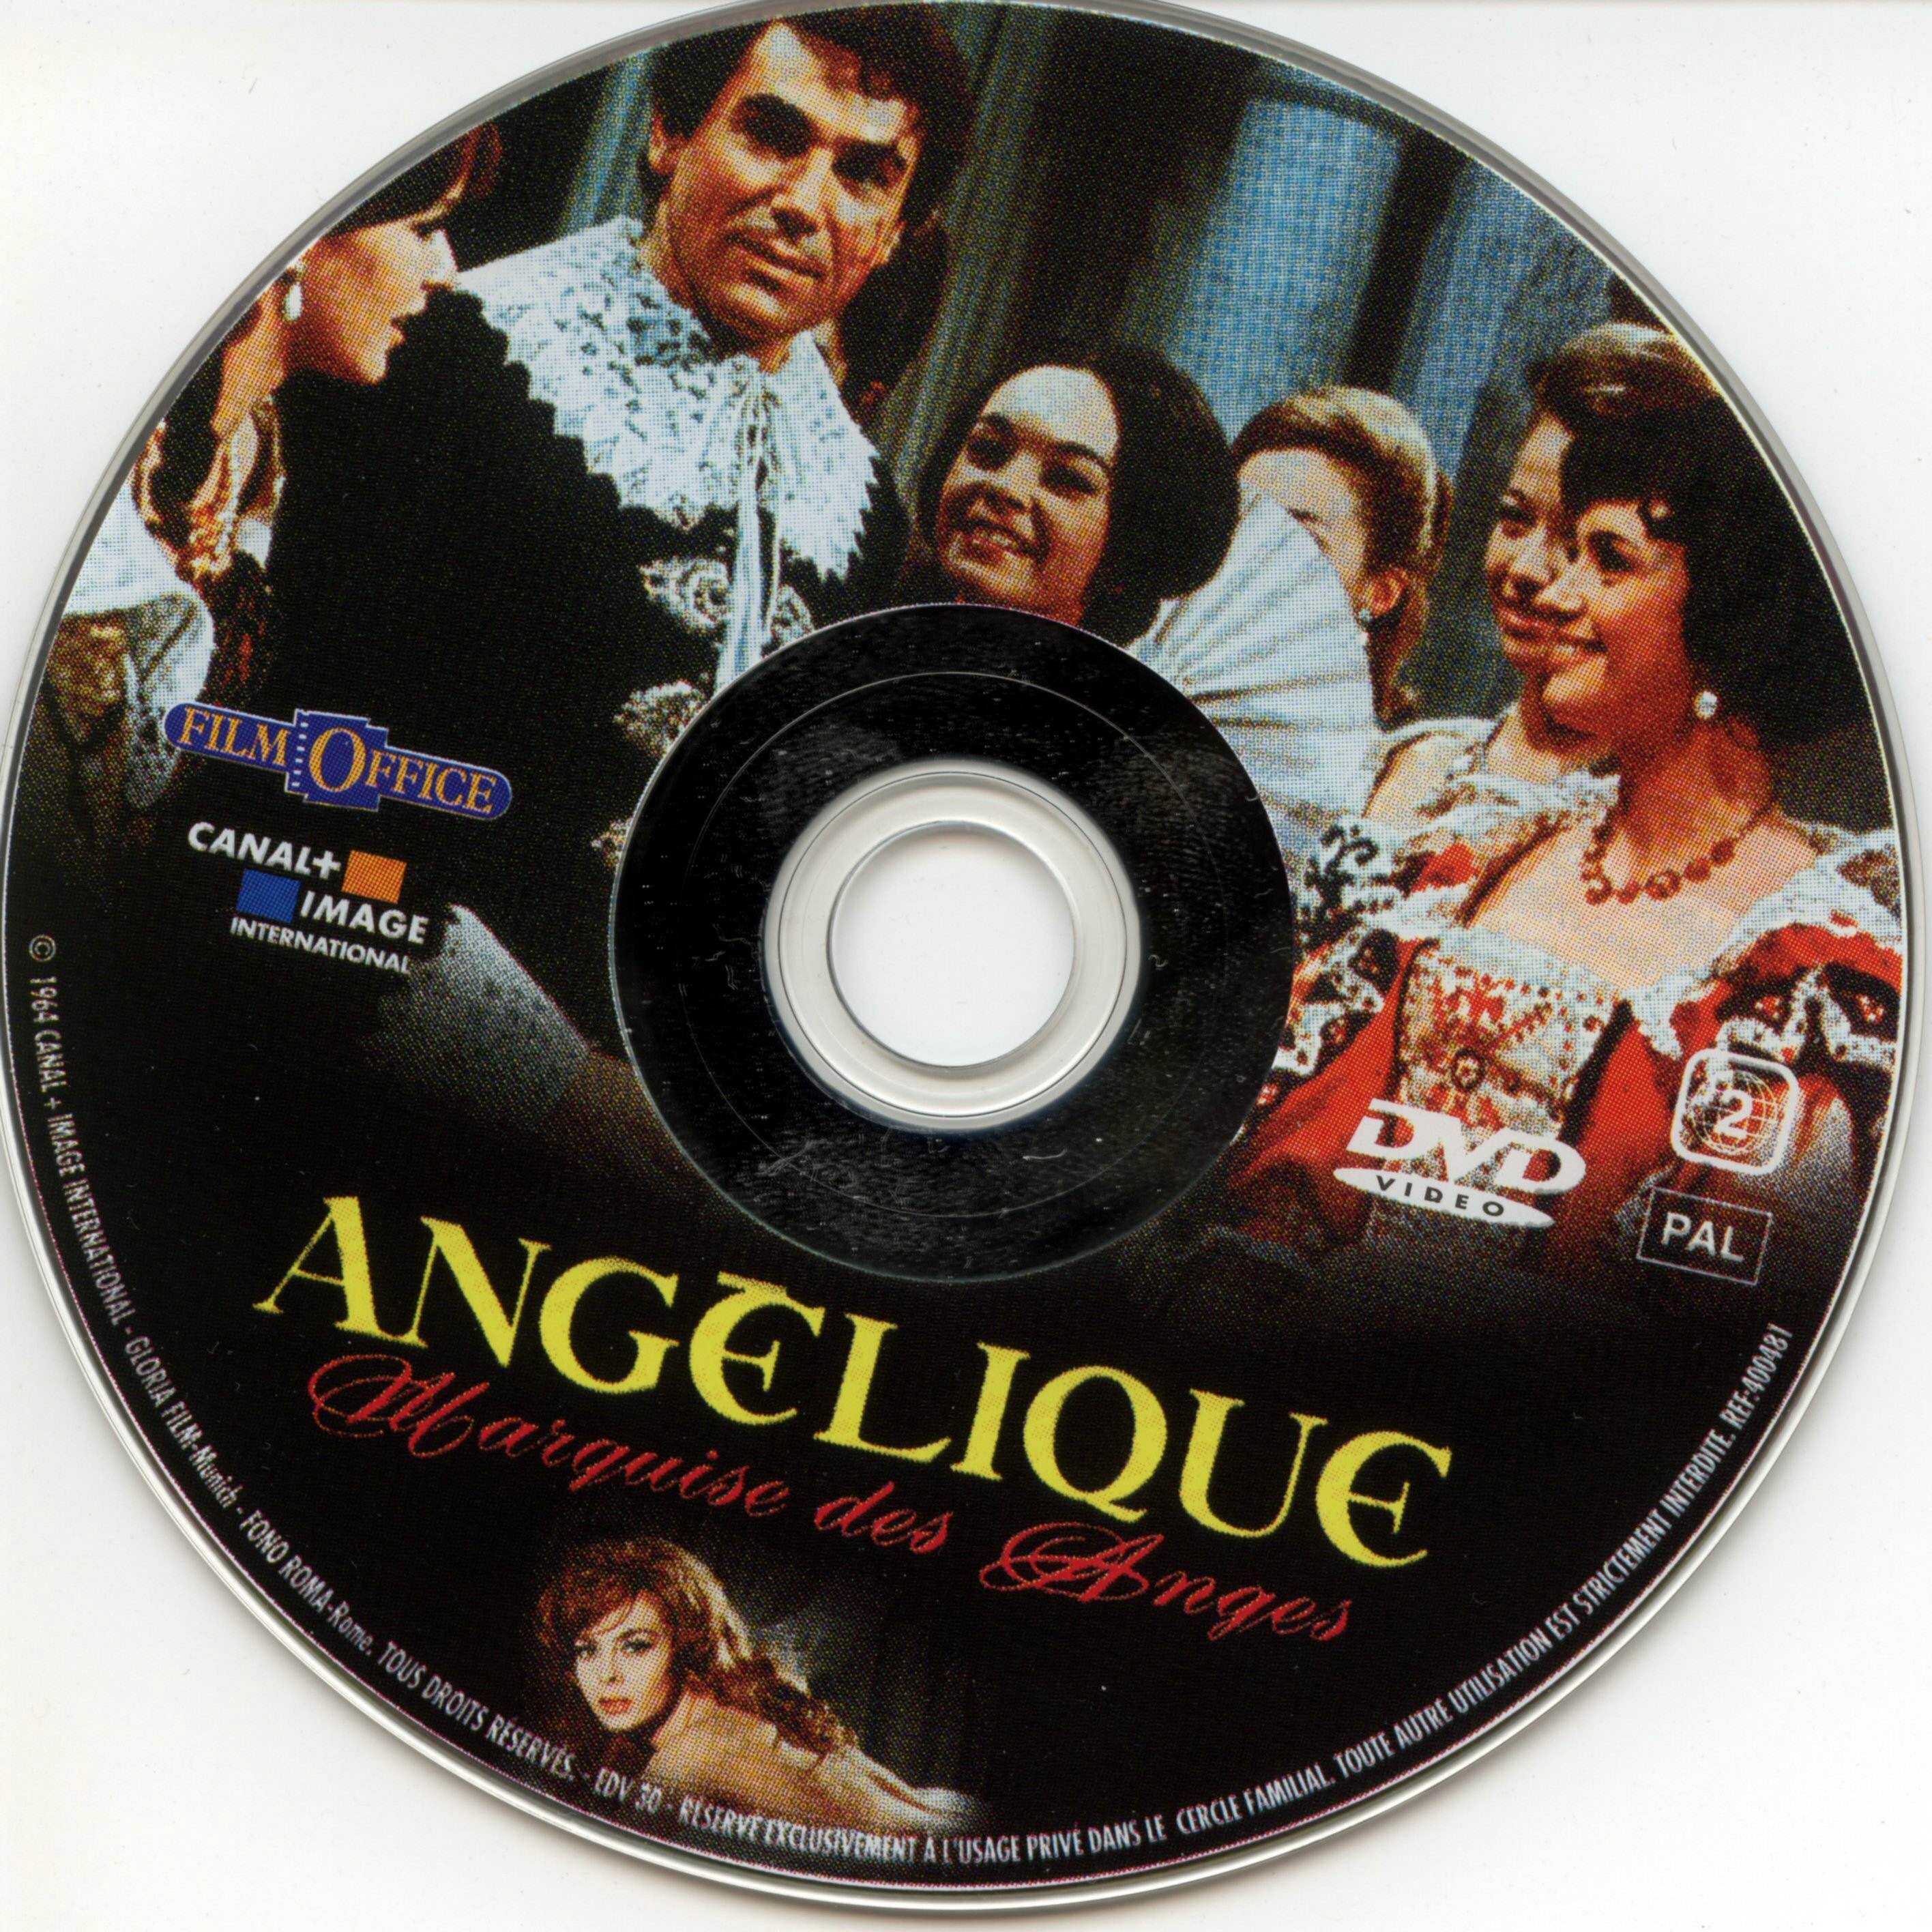 Anglique - Marquise des anges v2